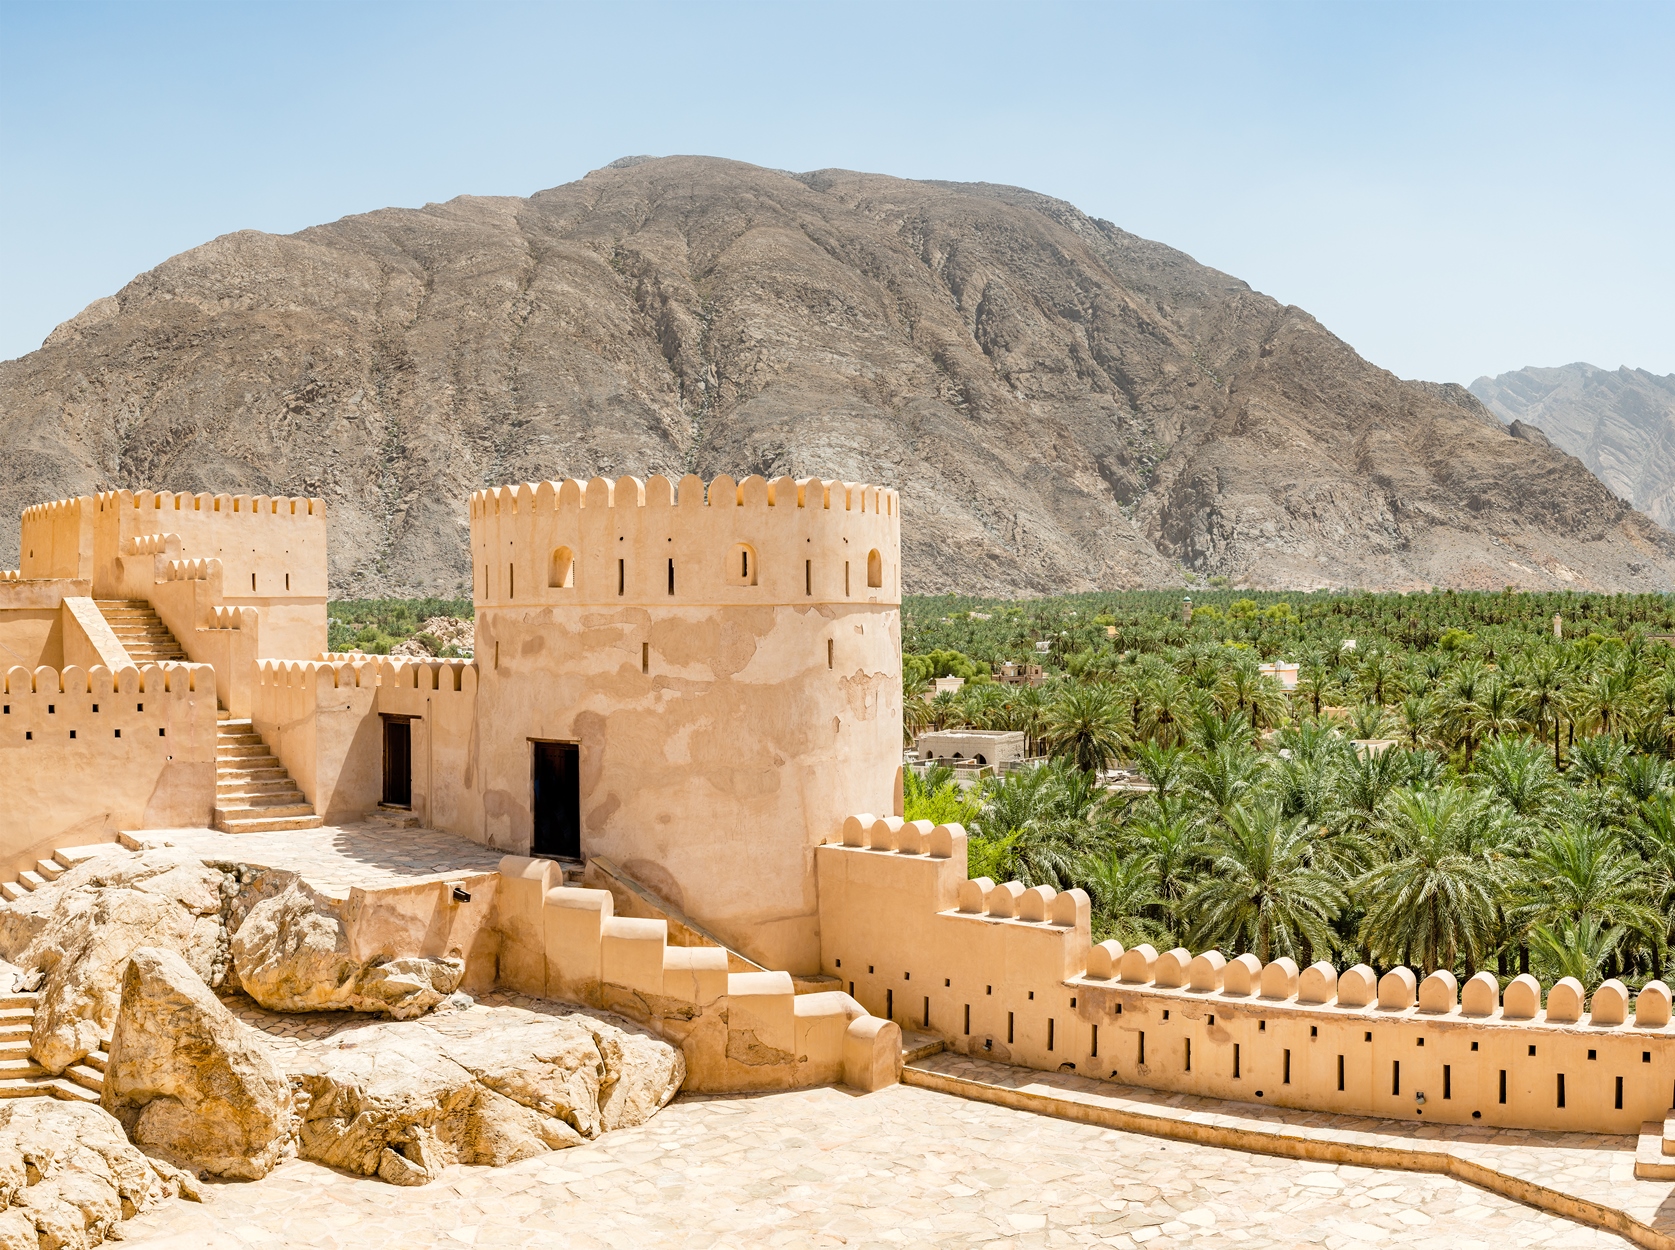 The Nakhal Fort, Oman